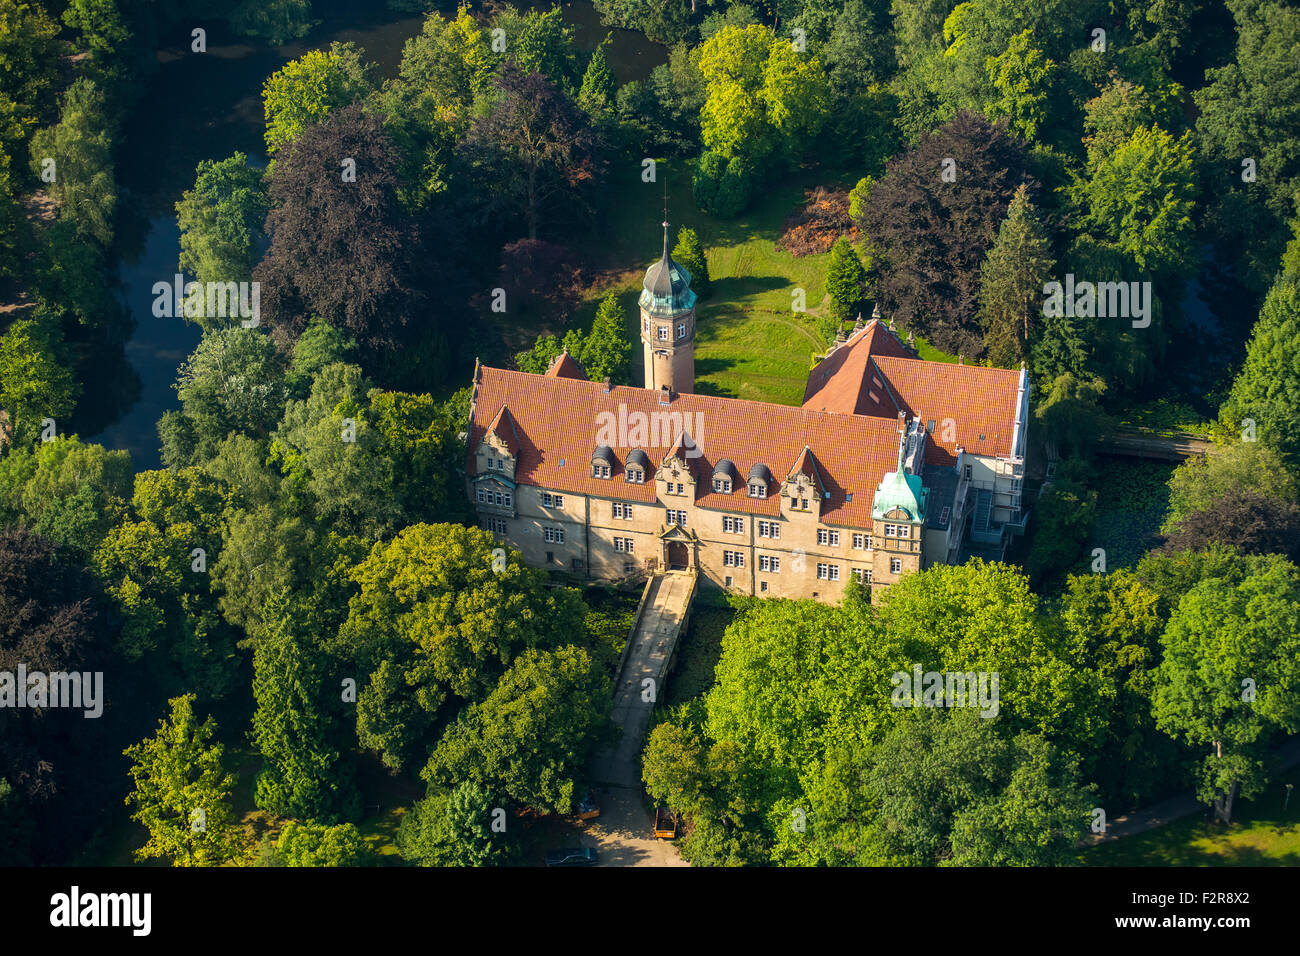 Wasserschloss Uhlenburg, moated castle, Löhne, North Rhine-Westphalia, Germany Stock Photo